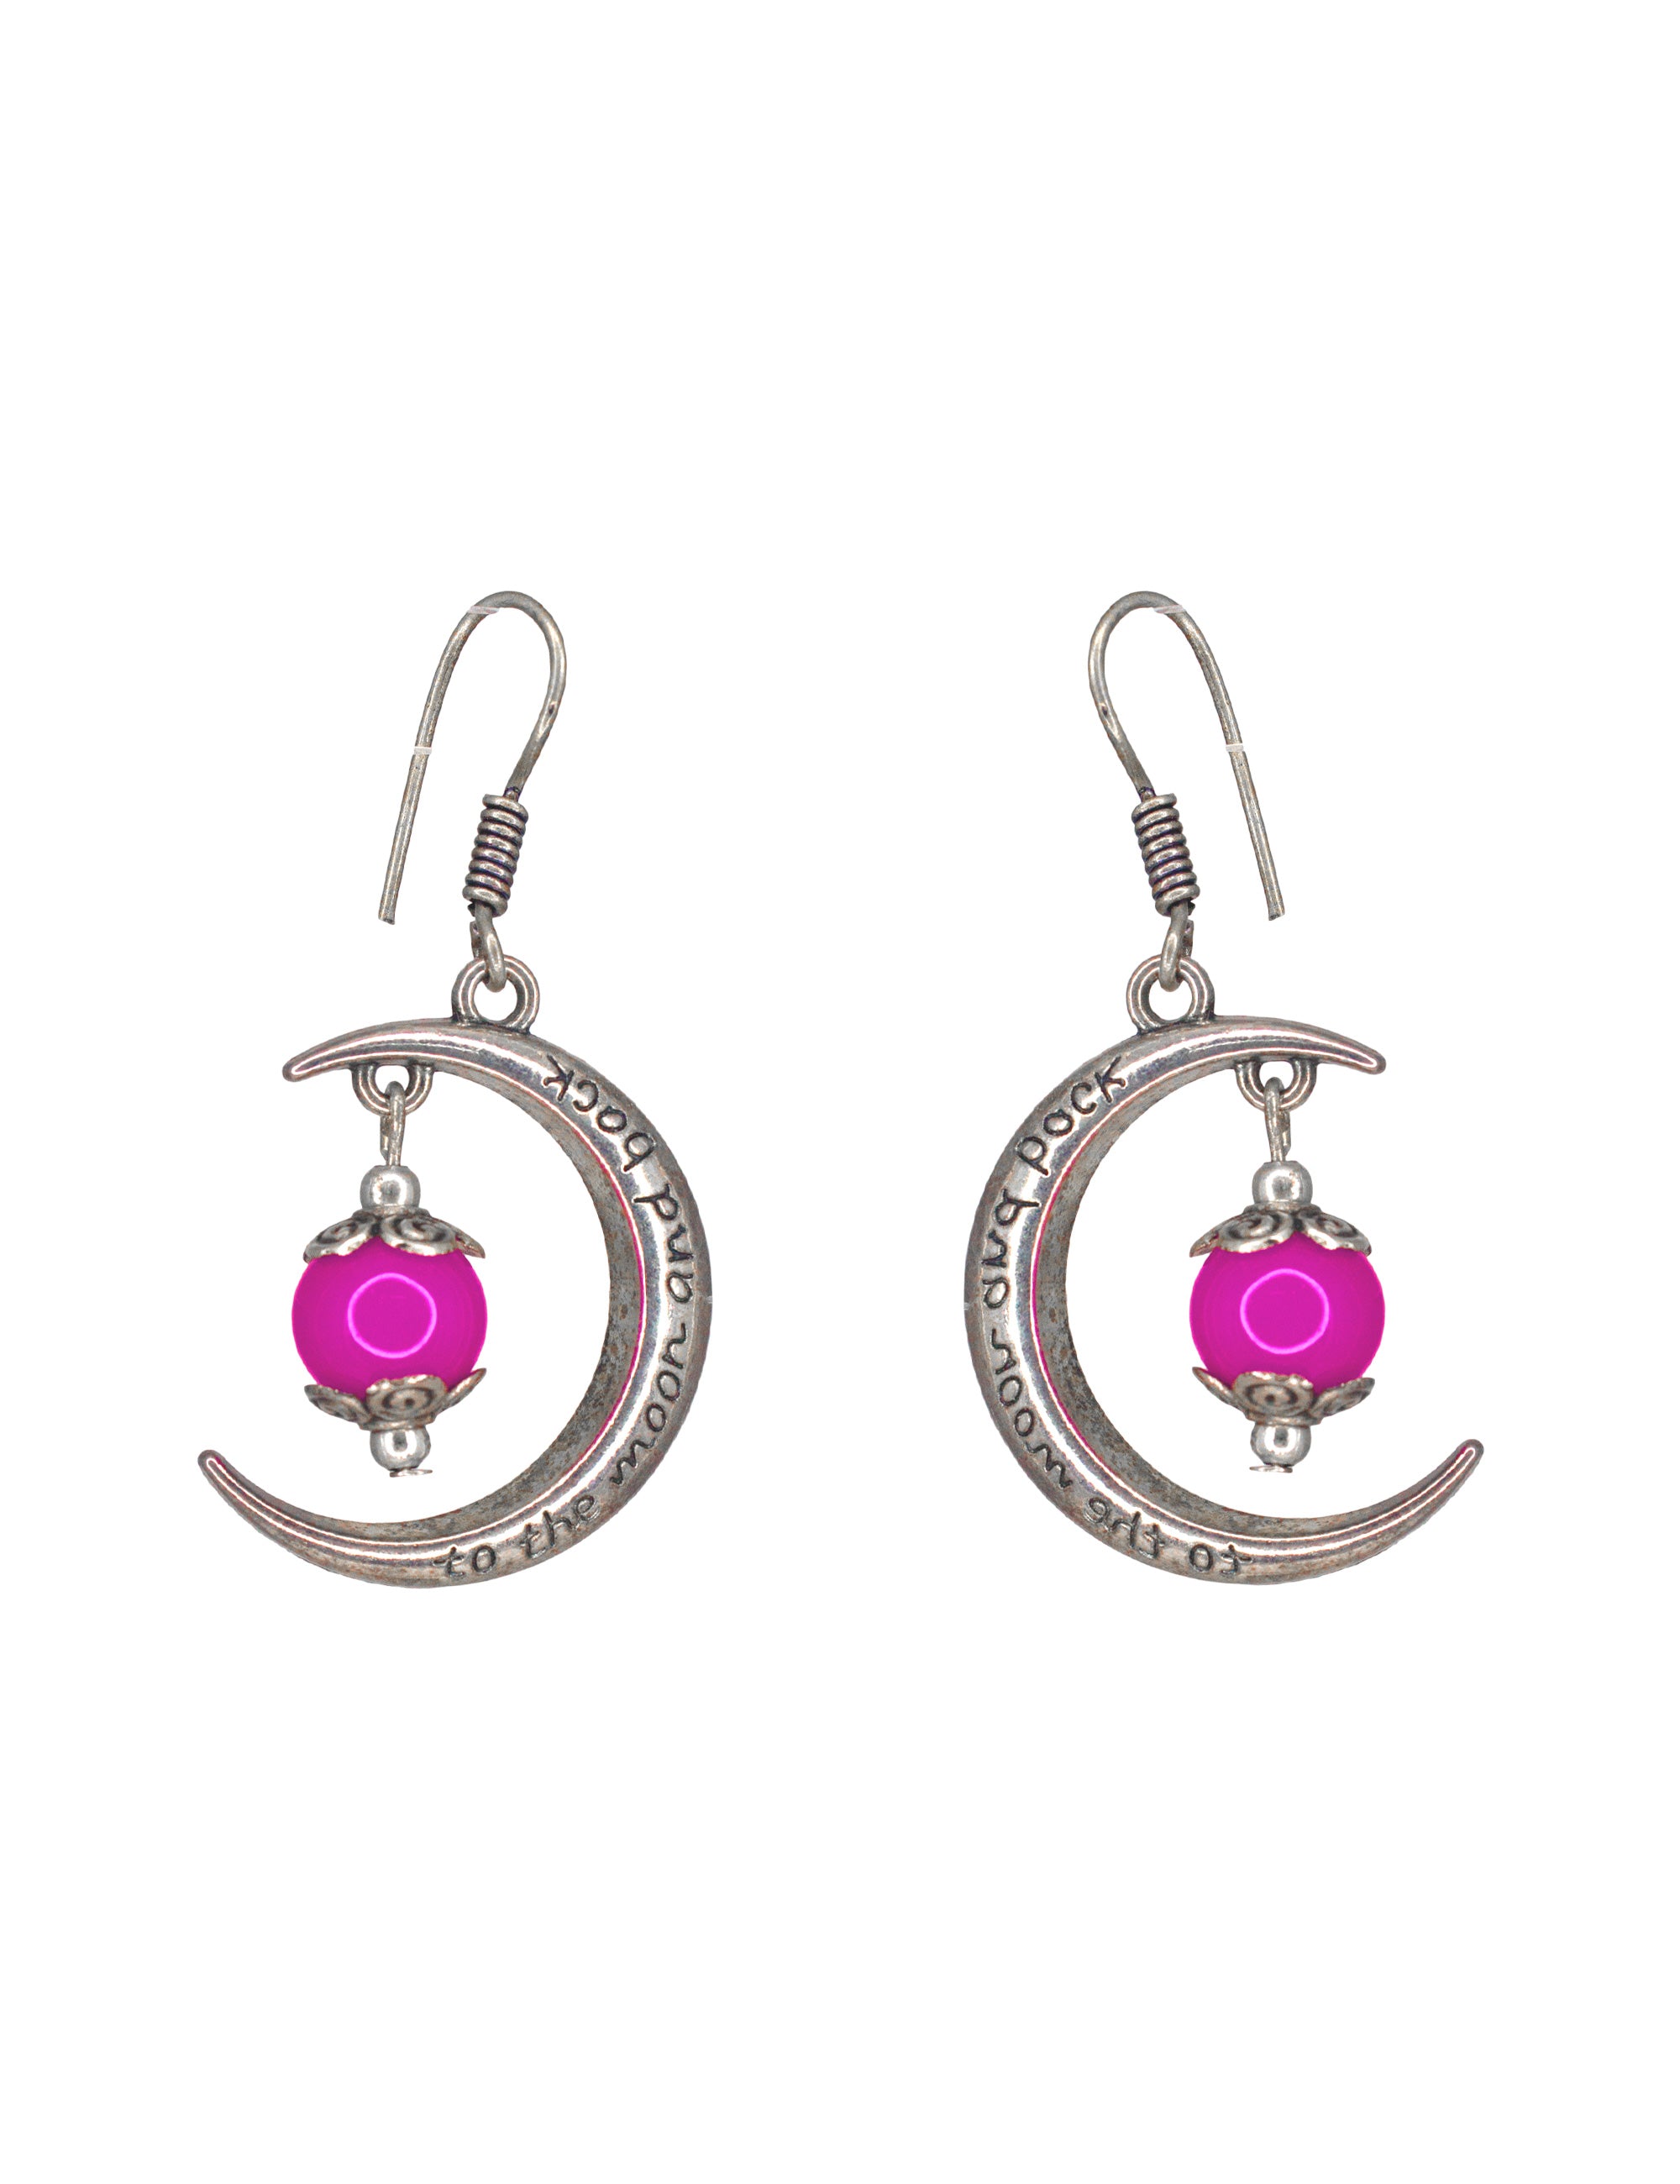 Abhinn Unique Silver Moon Shaped Pink Dangler Earrings For Women